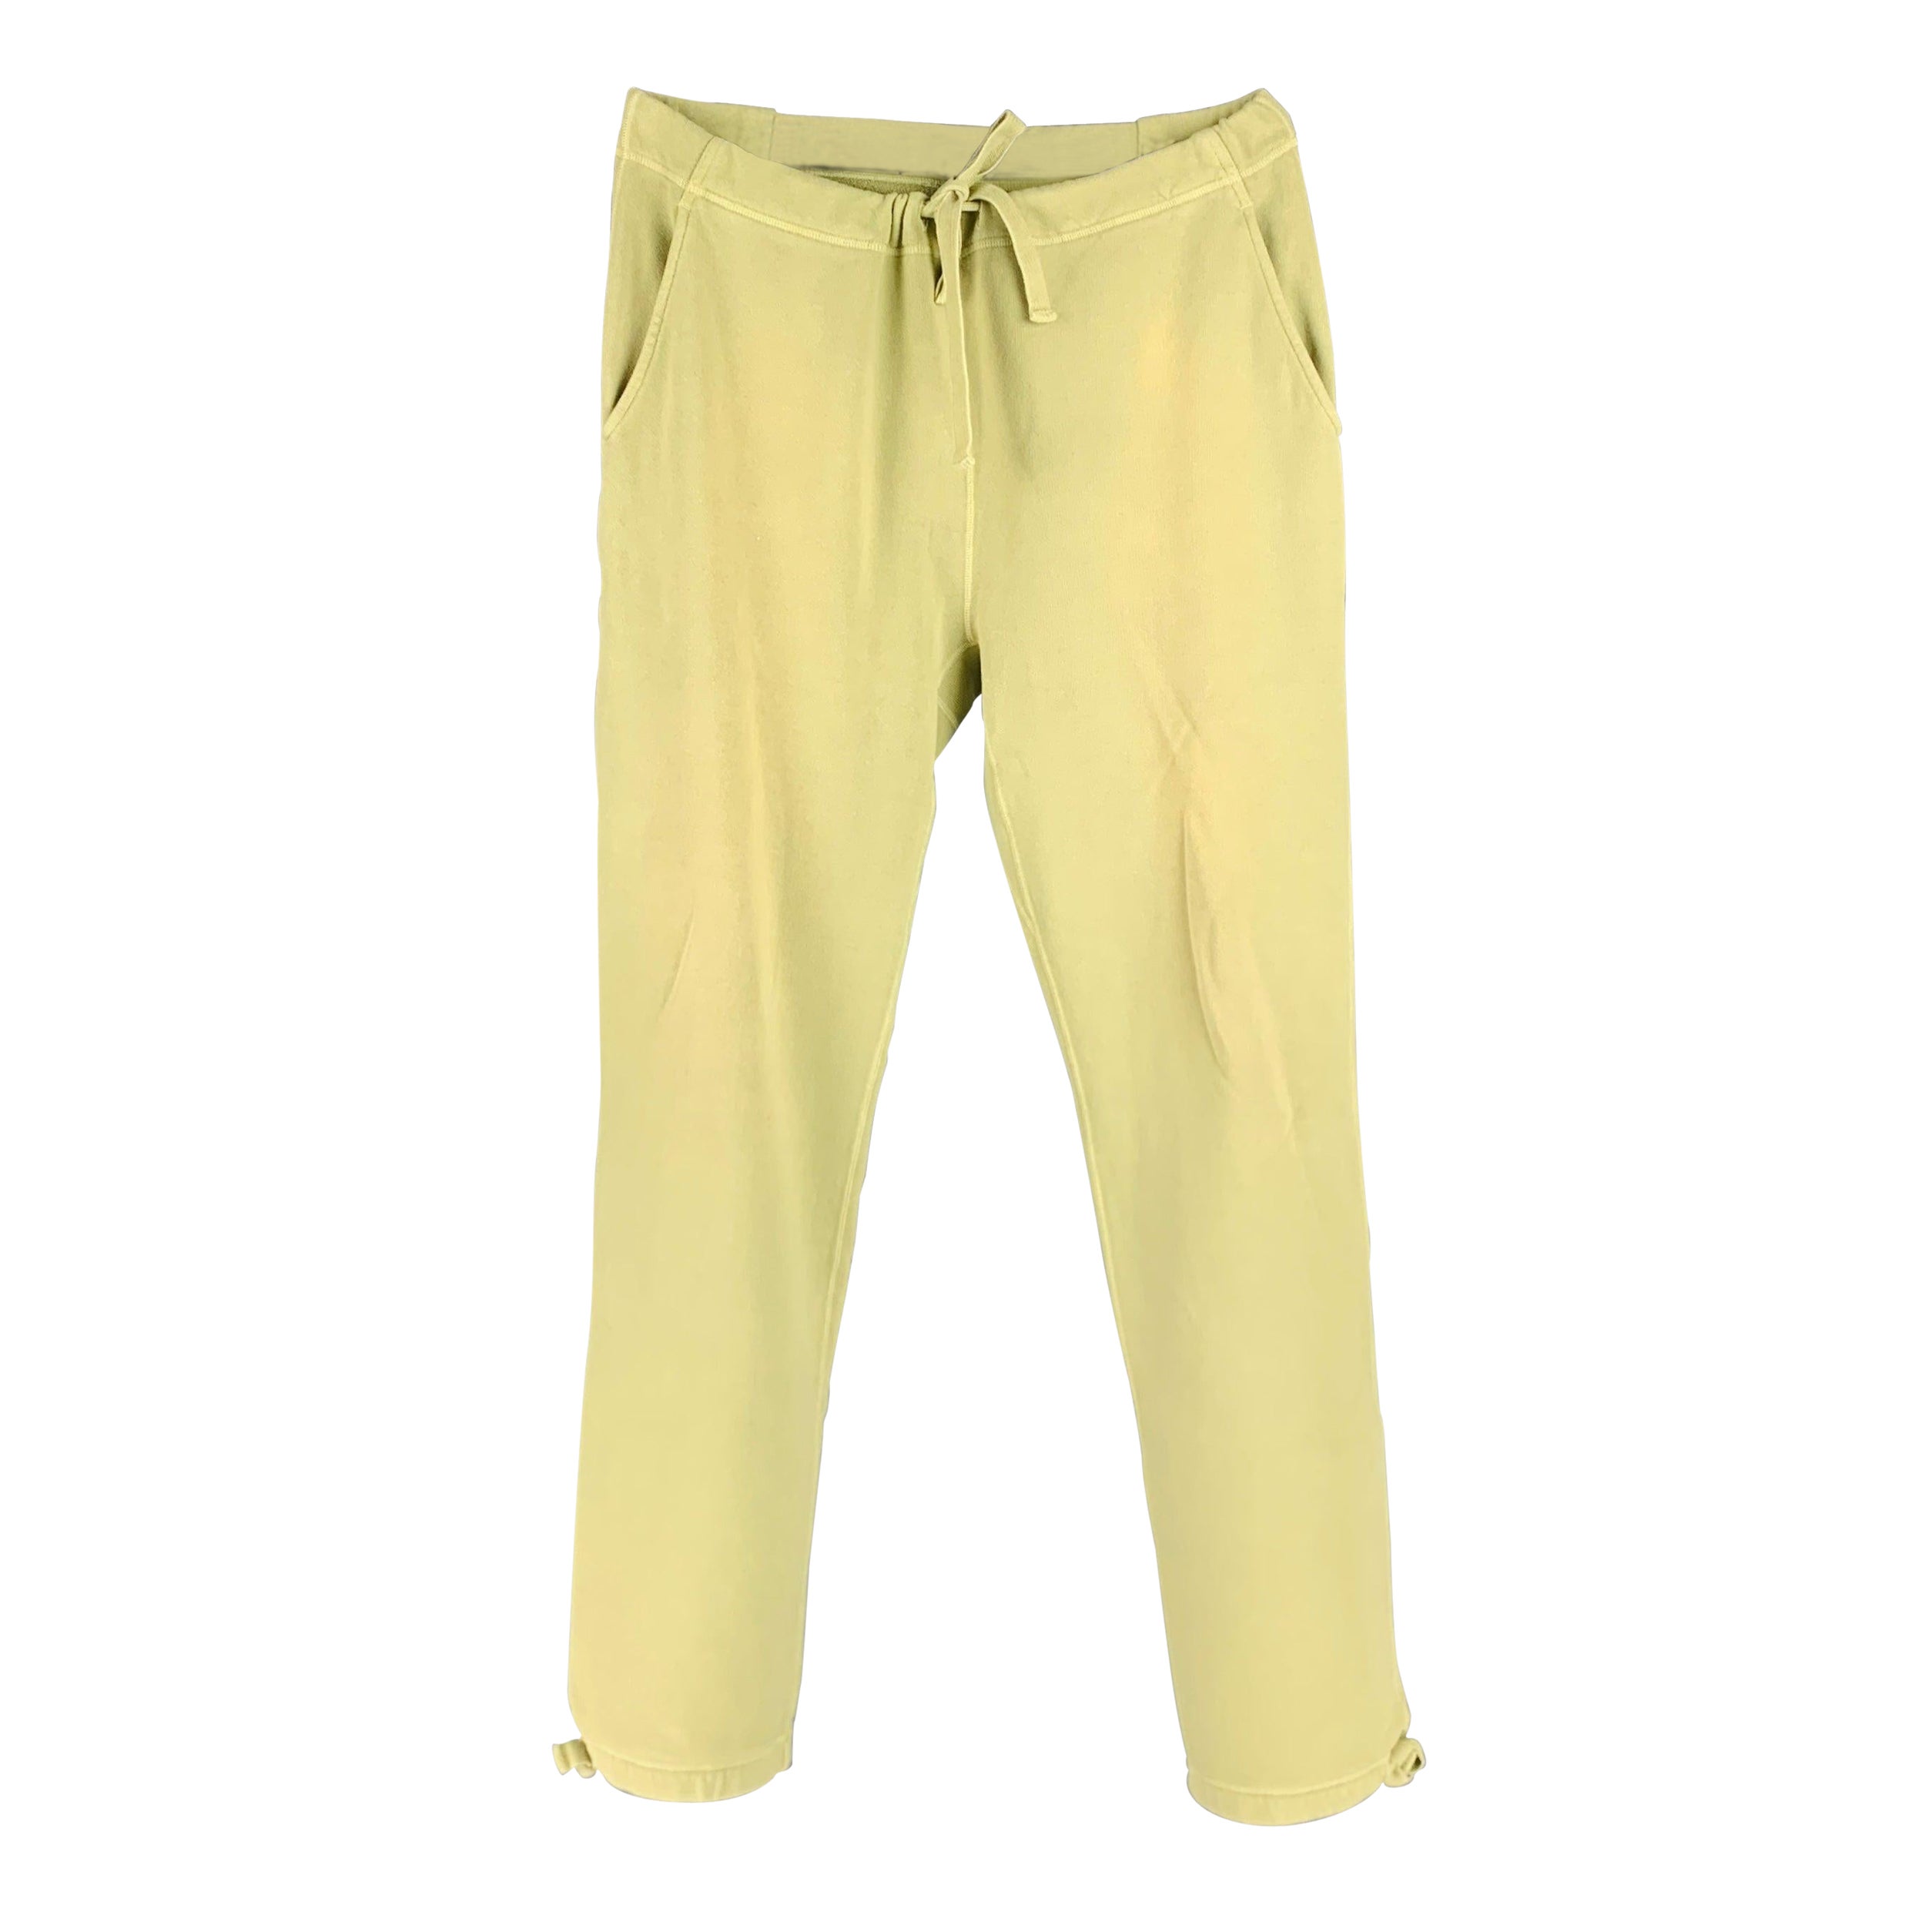 VISVIM Size M -Sweat Pants DMGD- Green Wash Cotton Drawstring Casual Pants For Sale